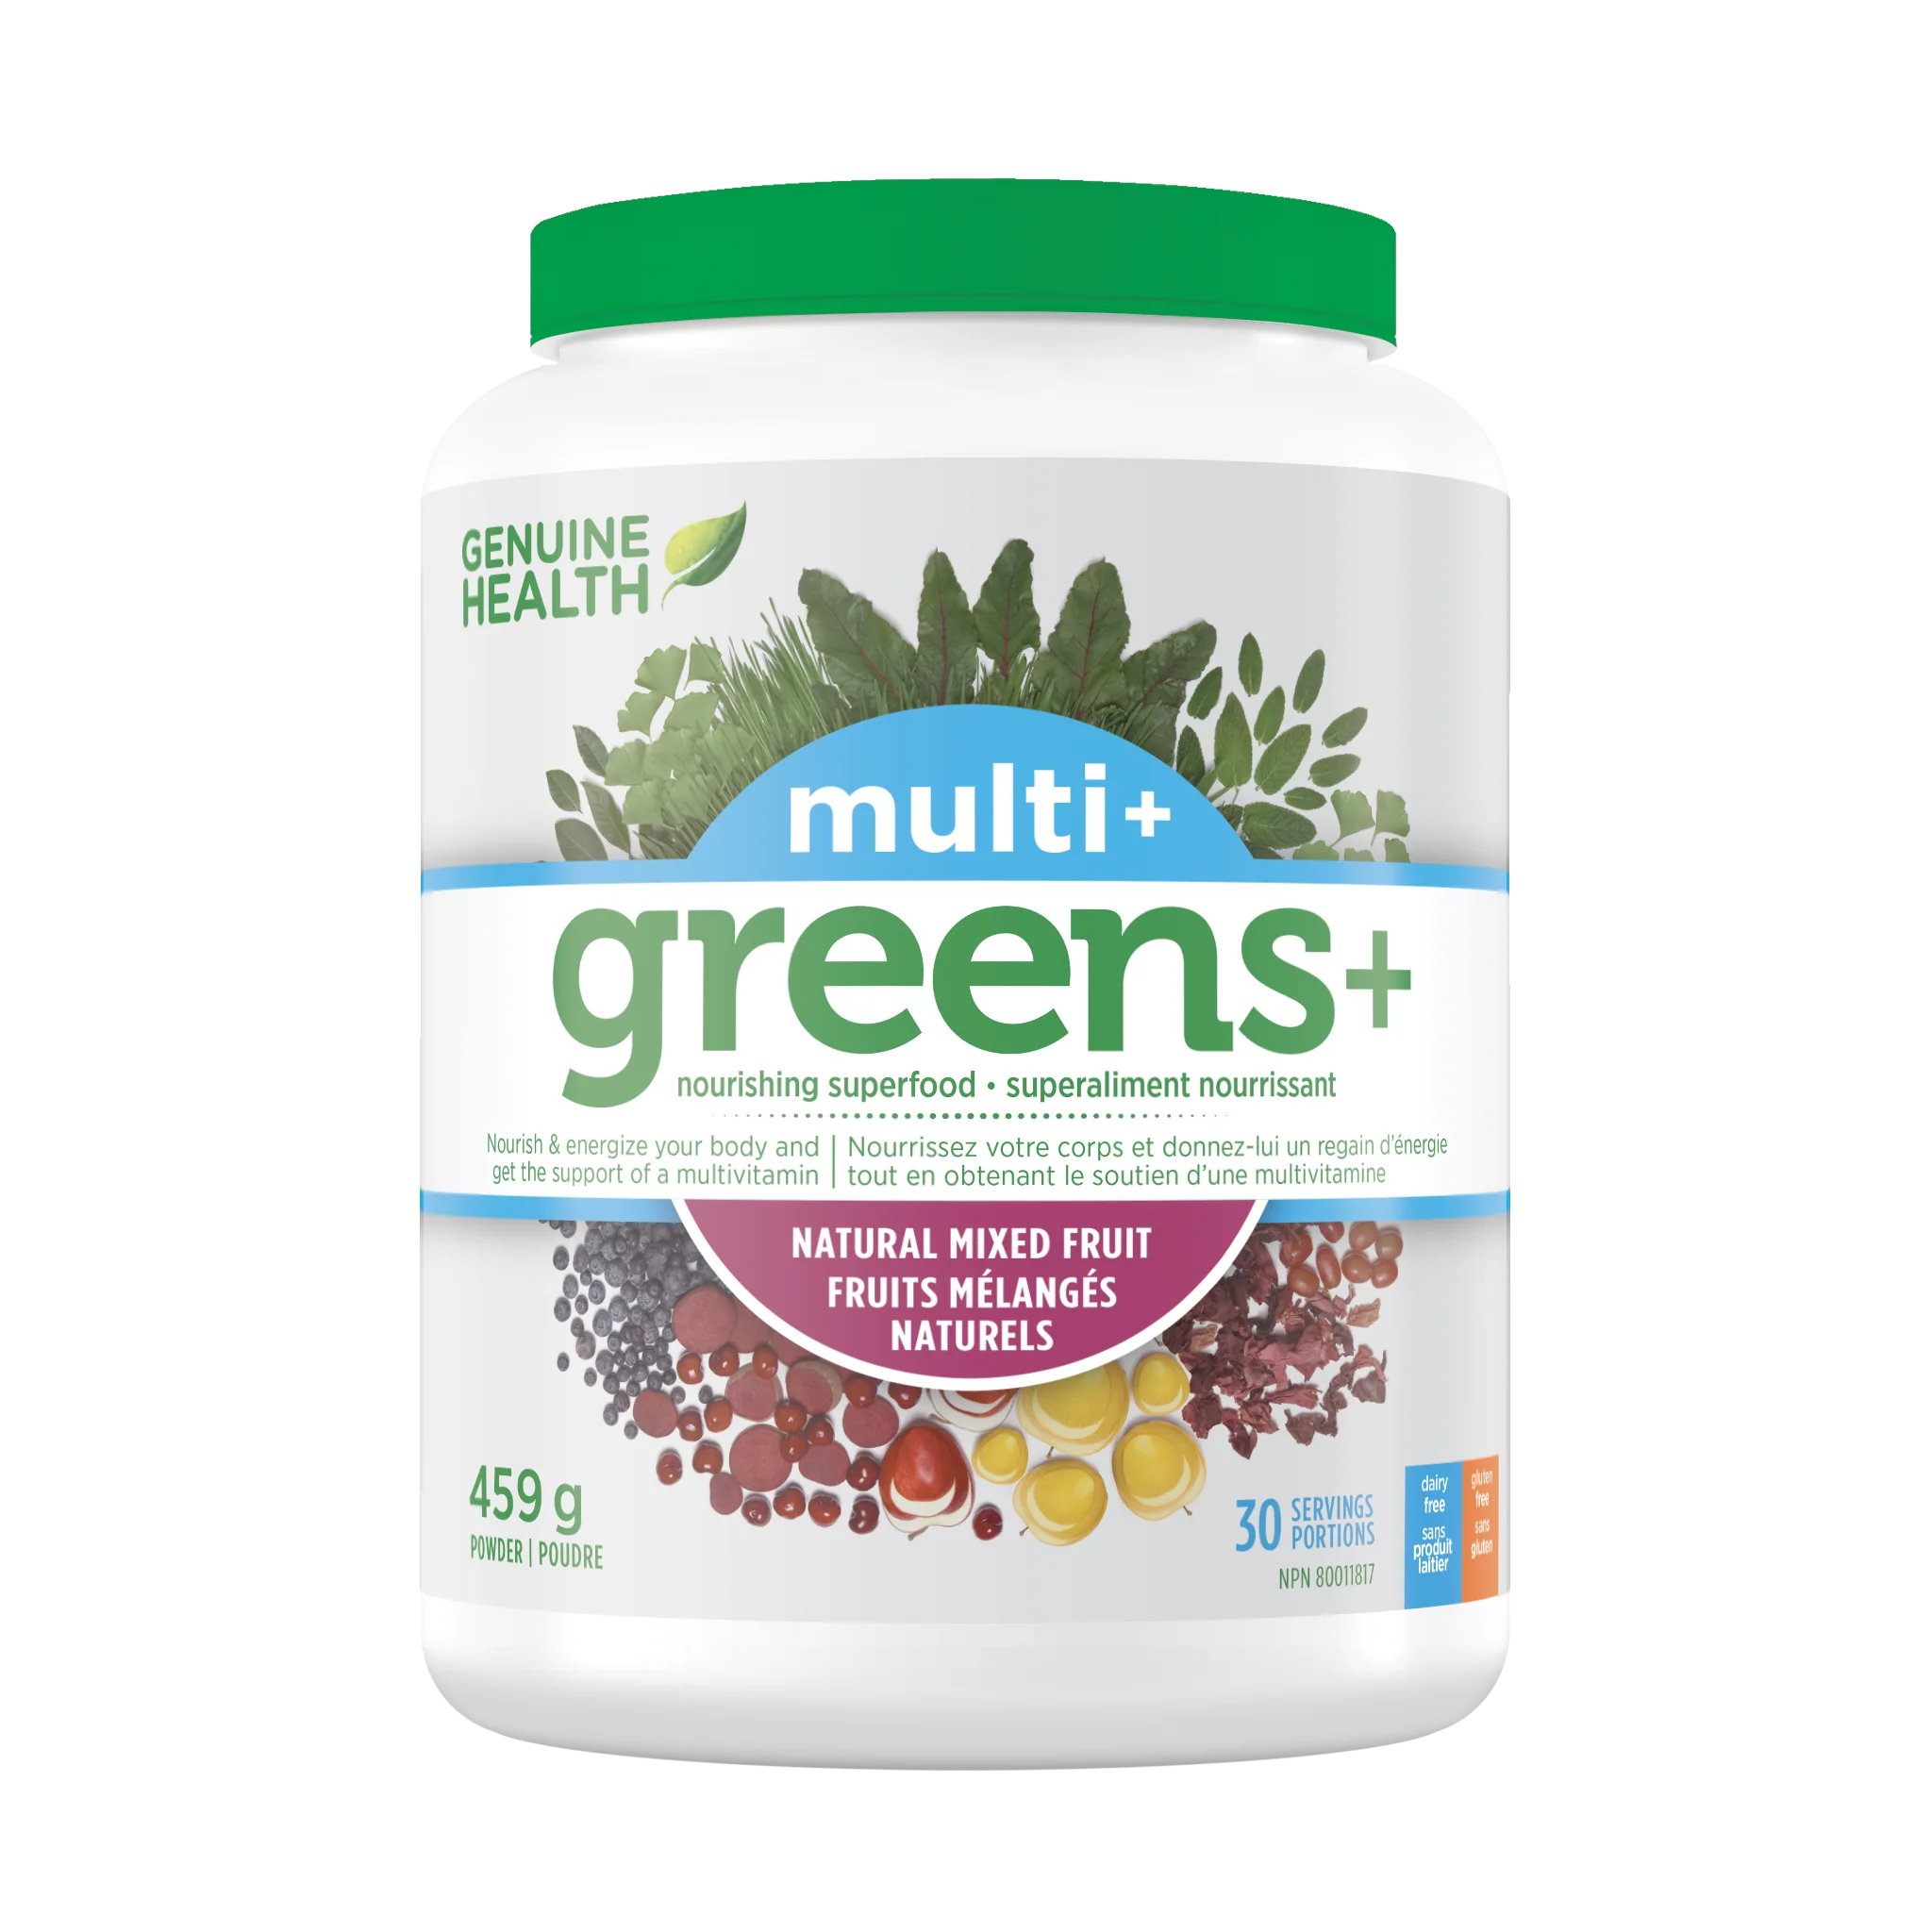 Genuine Health Greens+ Multivitamin - Mixed Fruit